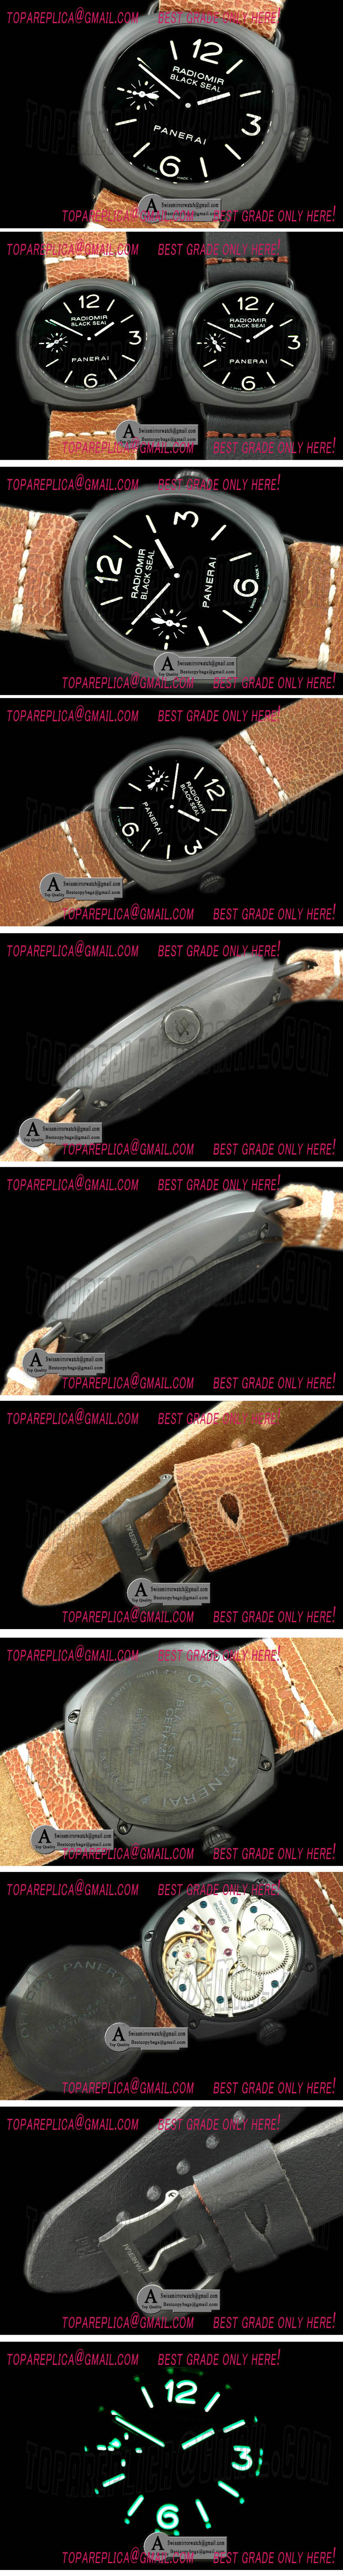 Panerai Pam 292K Ceramic/Leather Black Asian 6497 Superlume